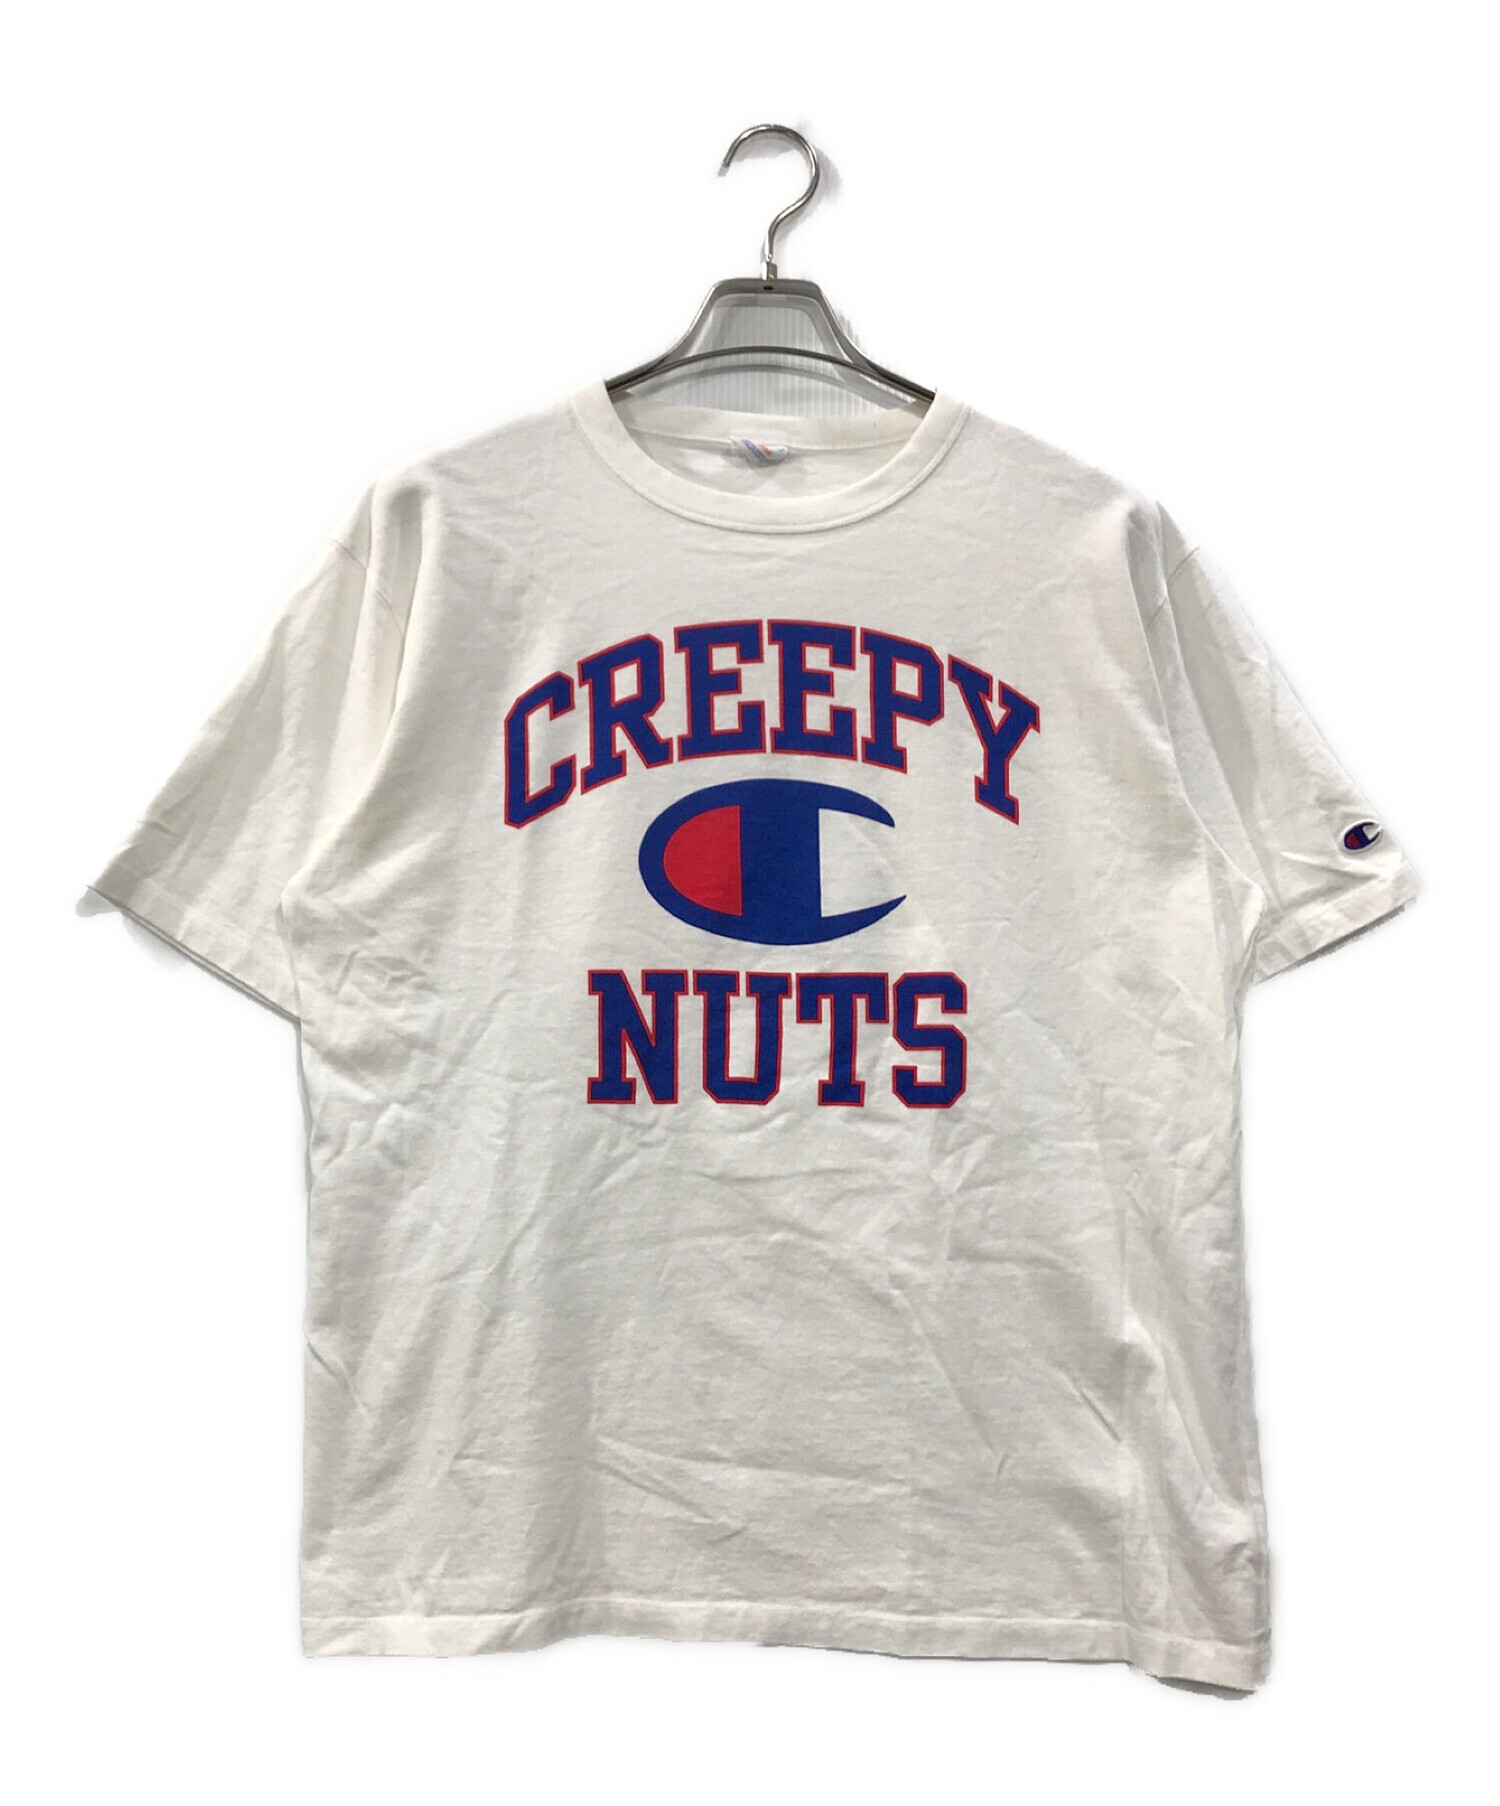 creepy nuts パーカー チャンピオンコラボ - 服/ファッション